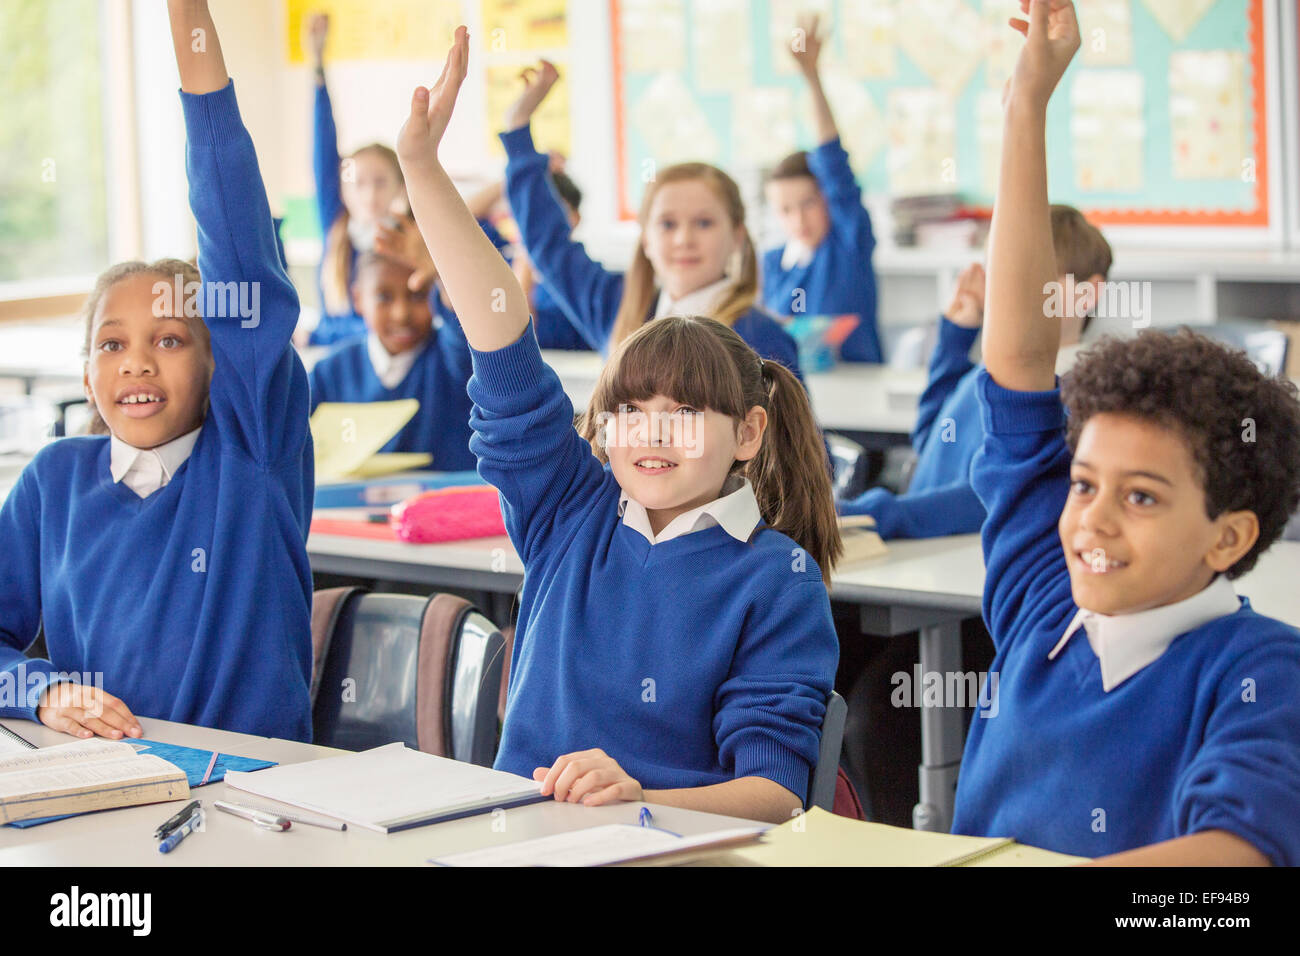 Elementary school children wearing blue school uniforms raising hands in classroom Stock Photo